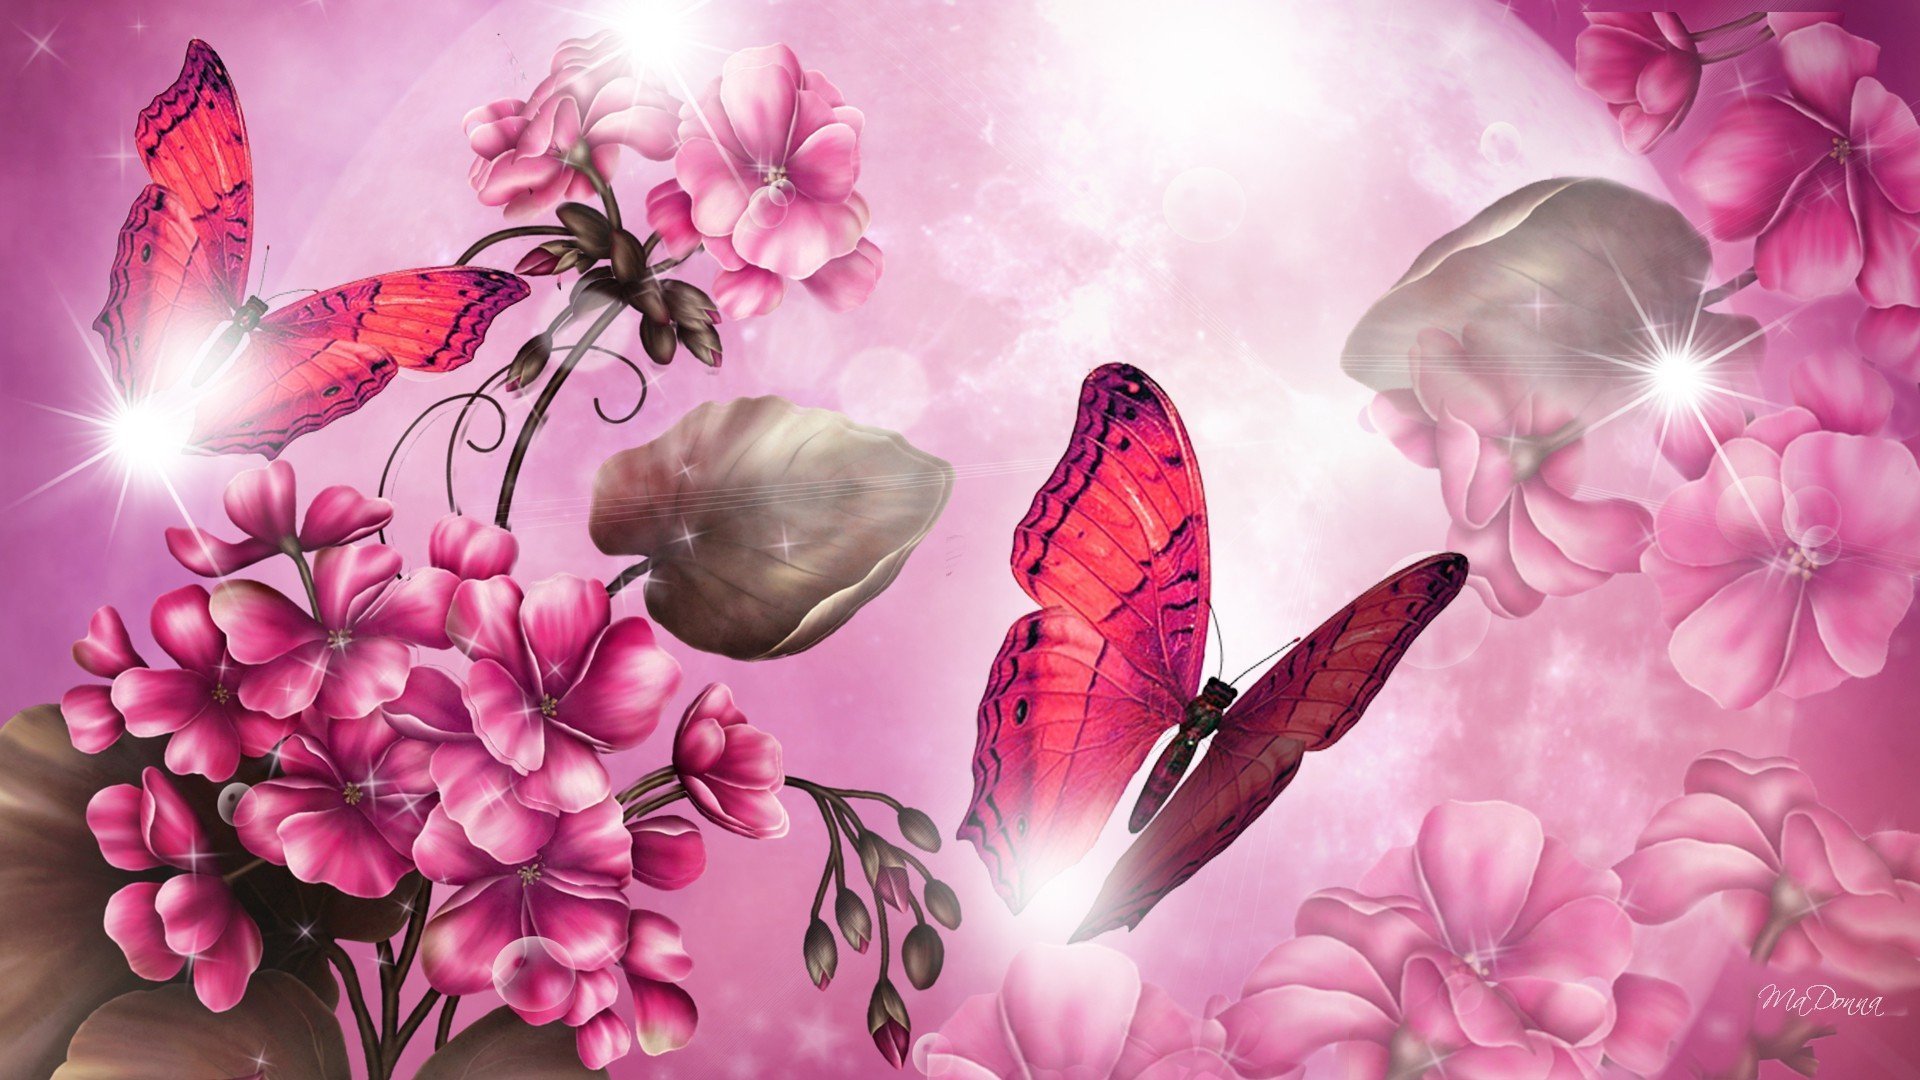 Обои на телефон с галереи. Фон бабочки. Розовые бабочки. Бабочка на цветке. Фотообои с бабочками и цветами.